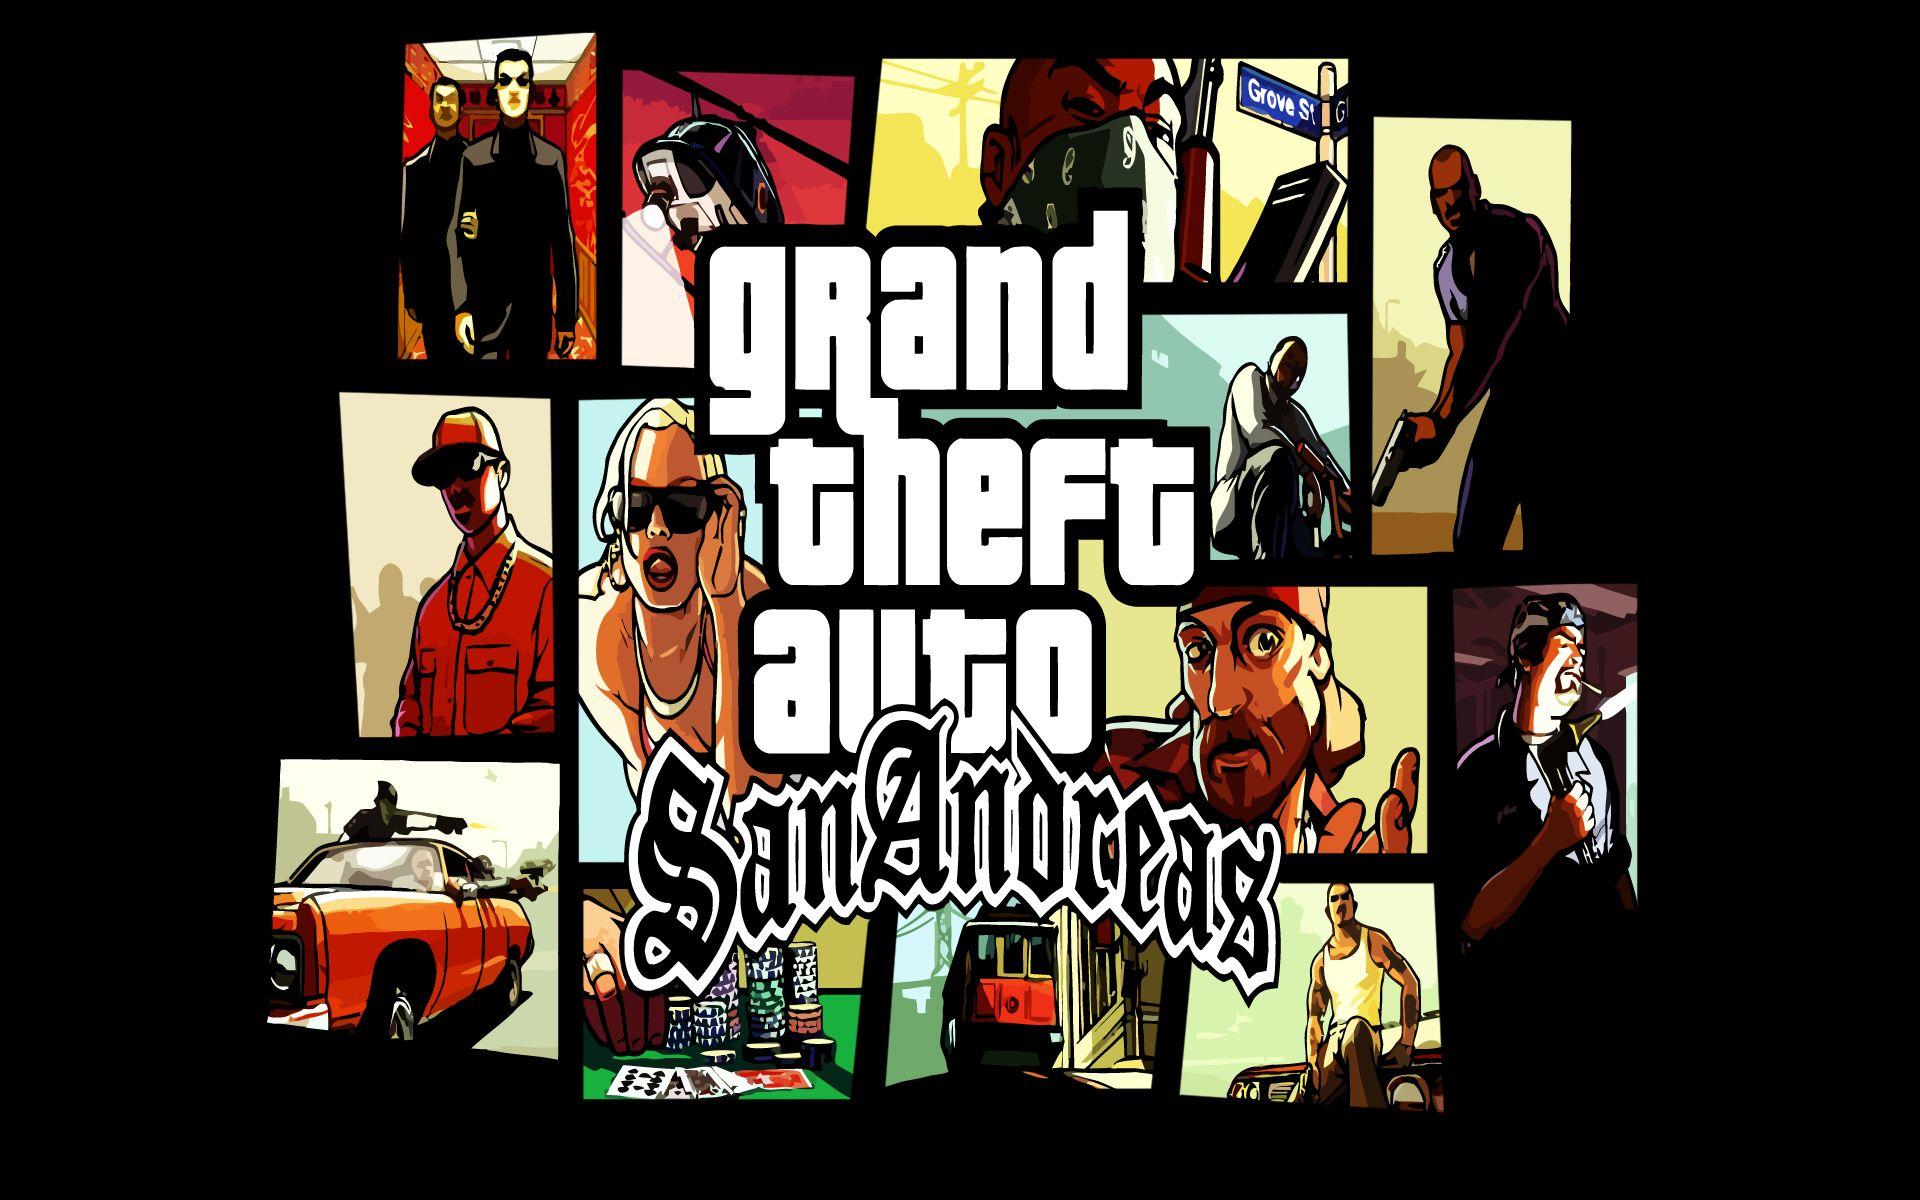 Grand Theft Auto San Andreas Wallpaper